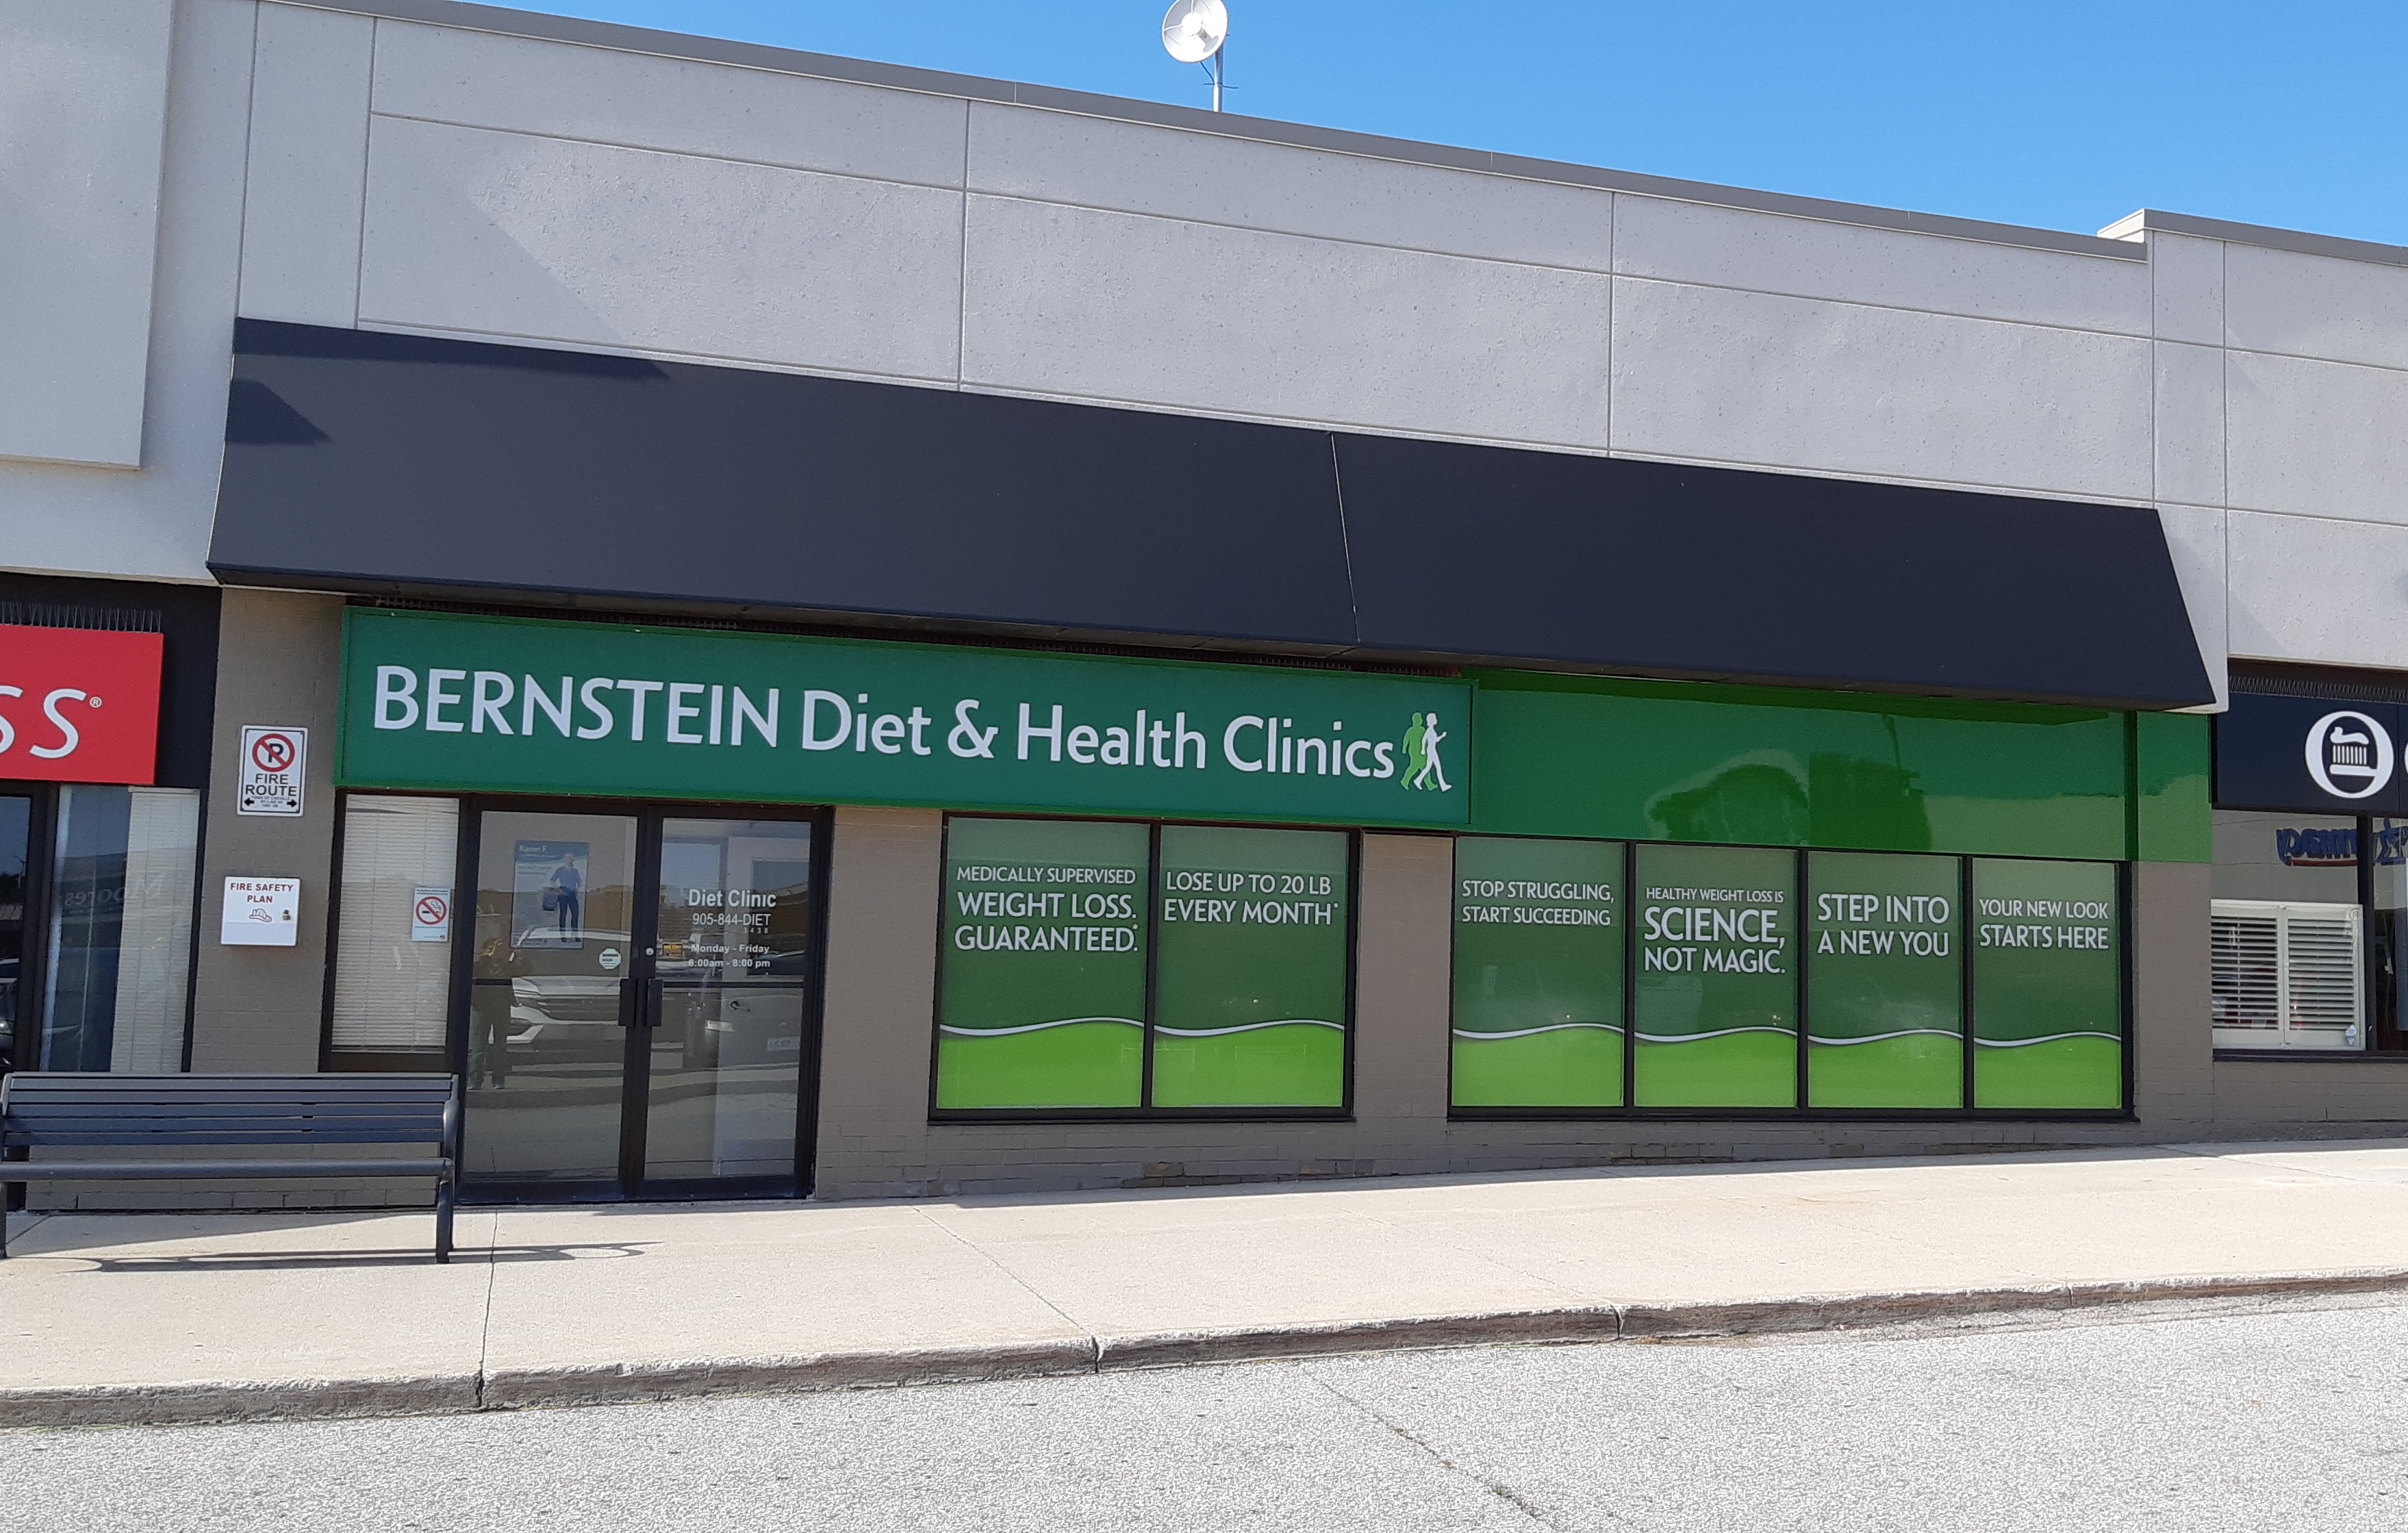 Dr. Bernstein Weight Loss & Diet Clinic, Oakville, Ontario